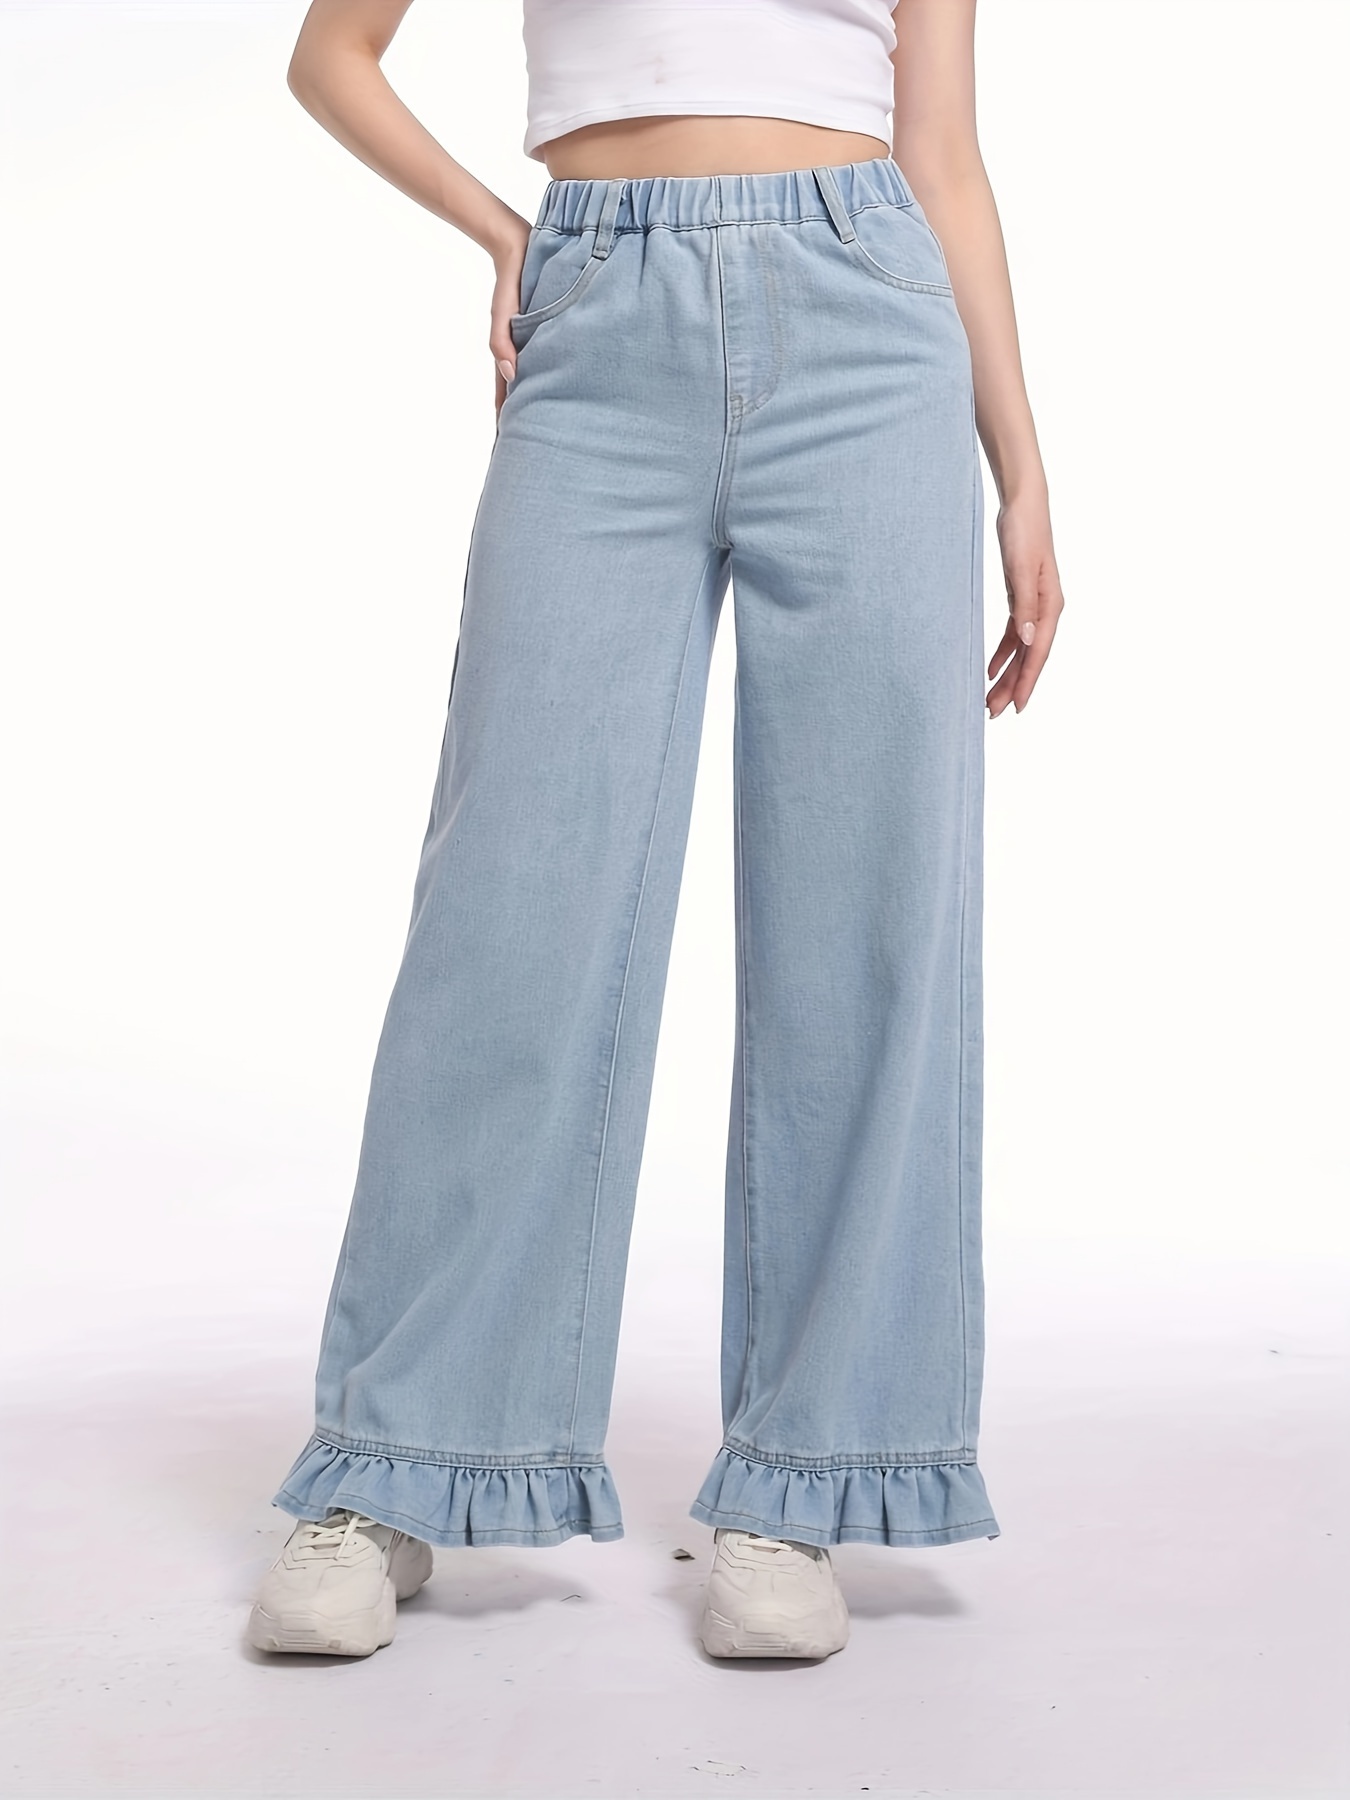 Women's Ruffle Flare Jeans Fashion High Waist Elastic Raw Hem Bell